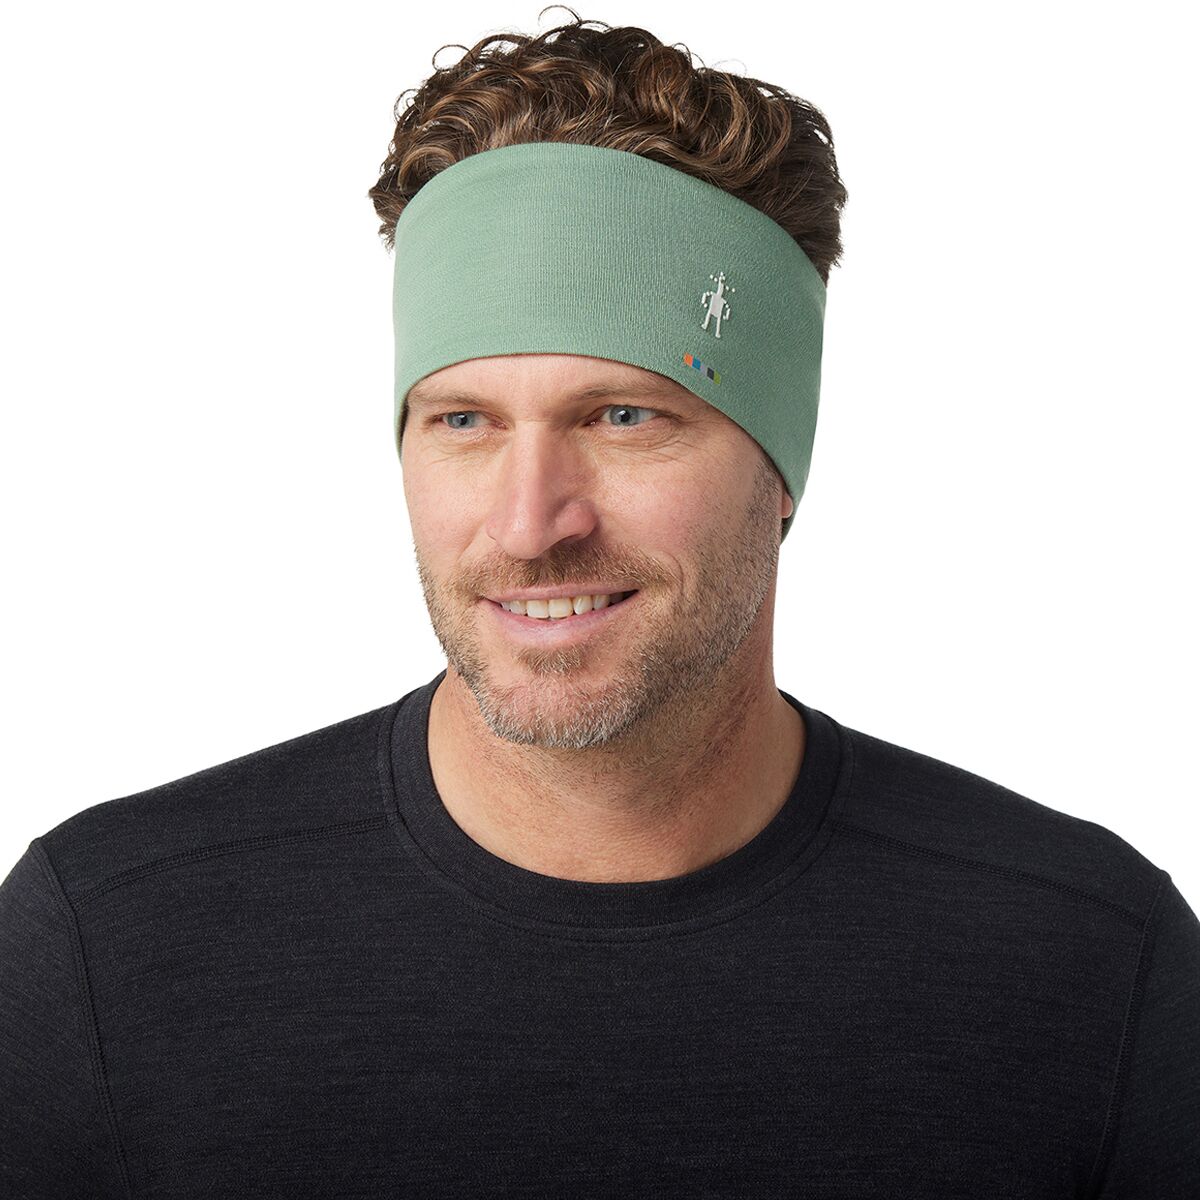 Smartwool Merino 250 Reversible Headband - Accessories